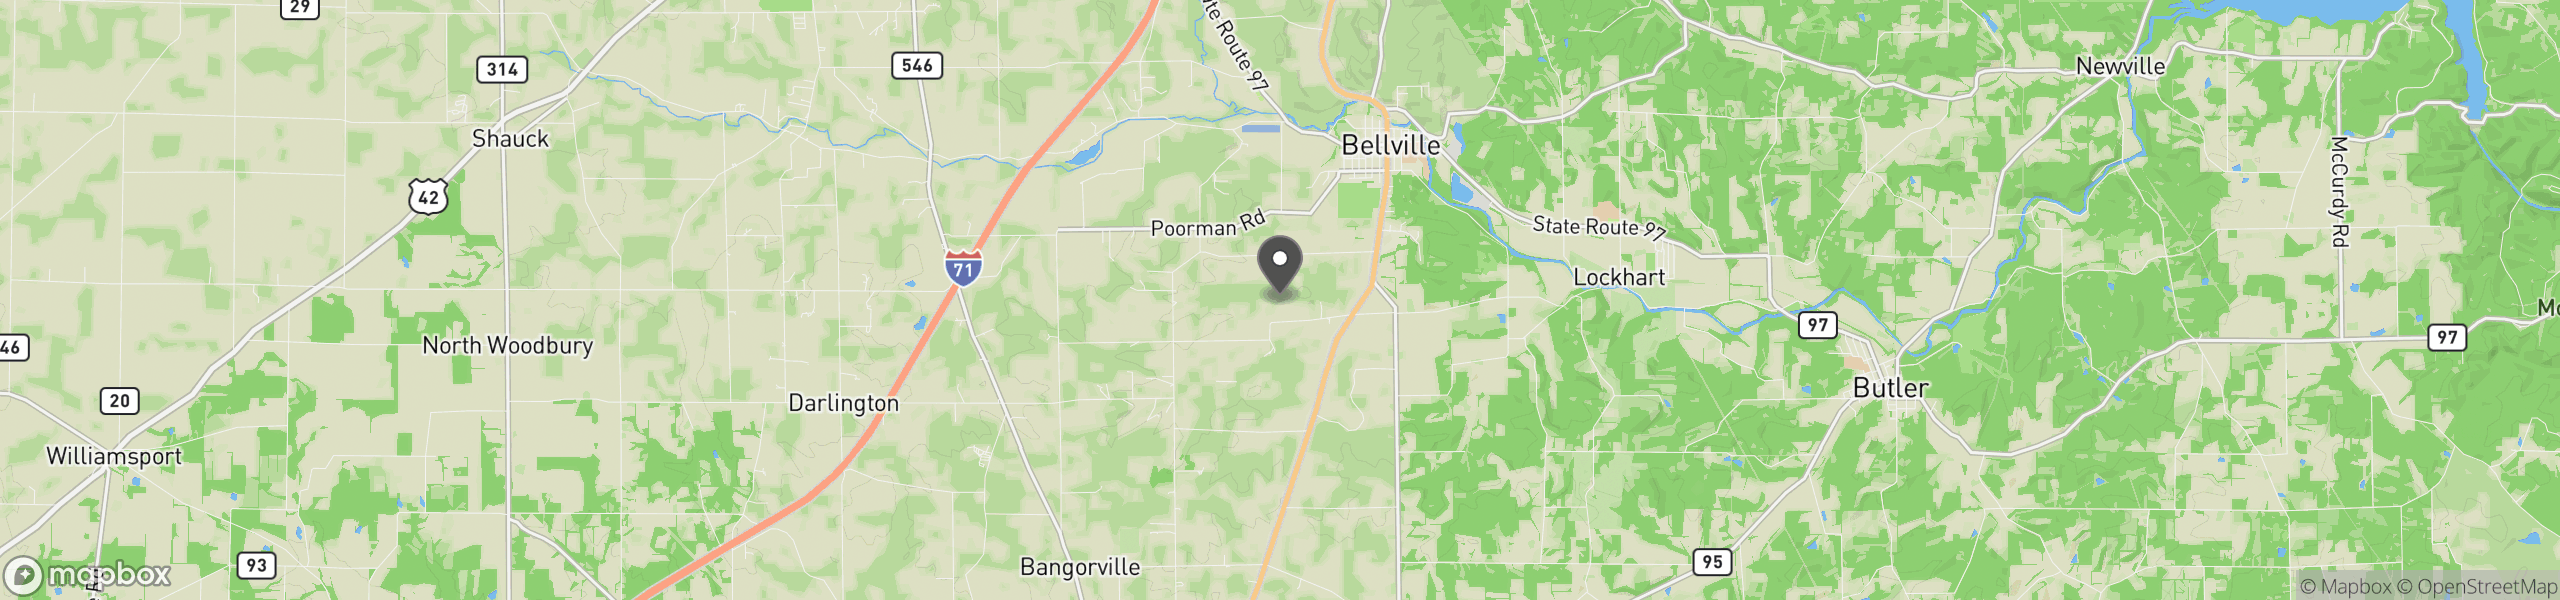 Bellville, OH 44813